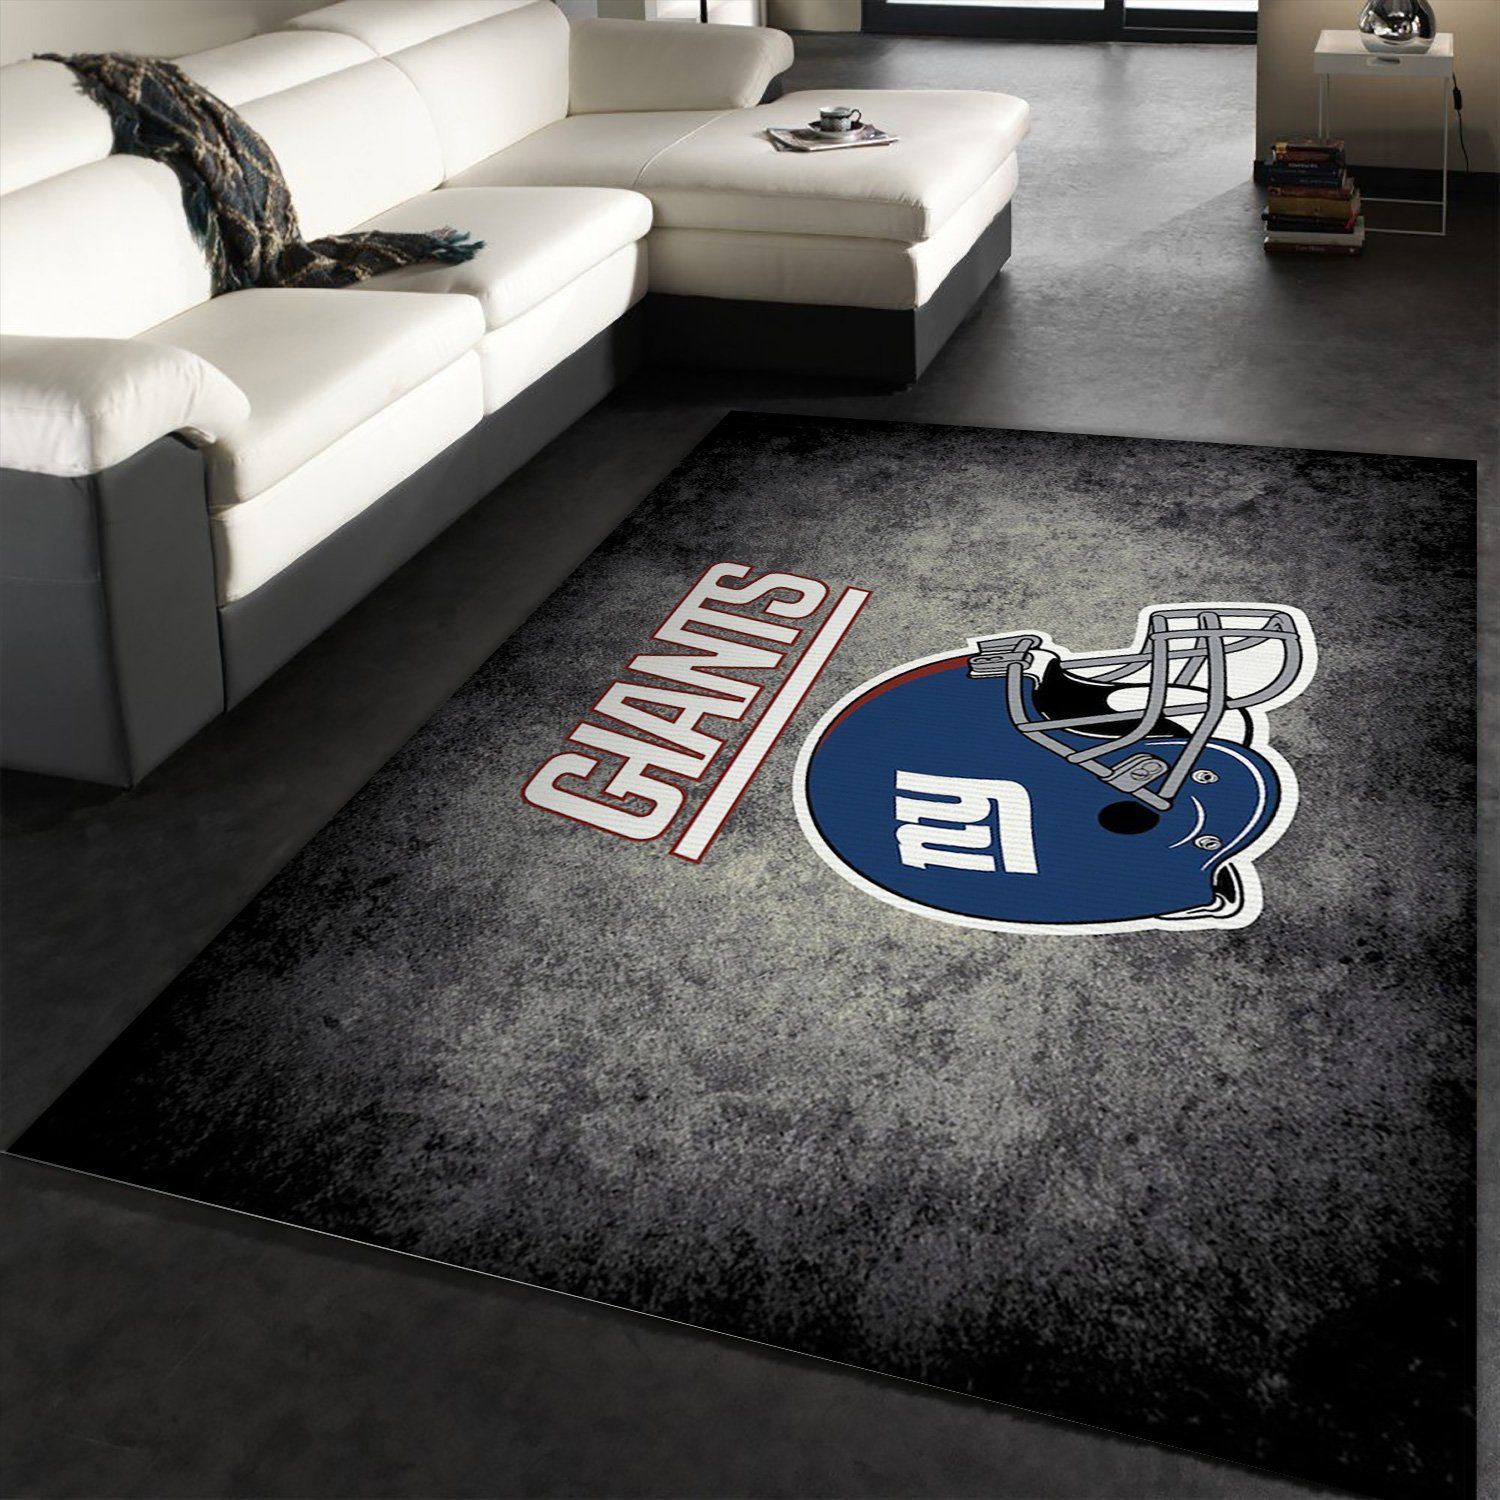 New York Giants Imperial Distressed Rug NFL Area Rug Carpet, Bedroom, Home Decor Floor Decor - Indoor Outdoor Rugs